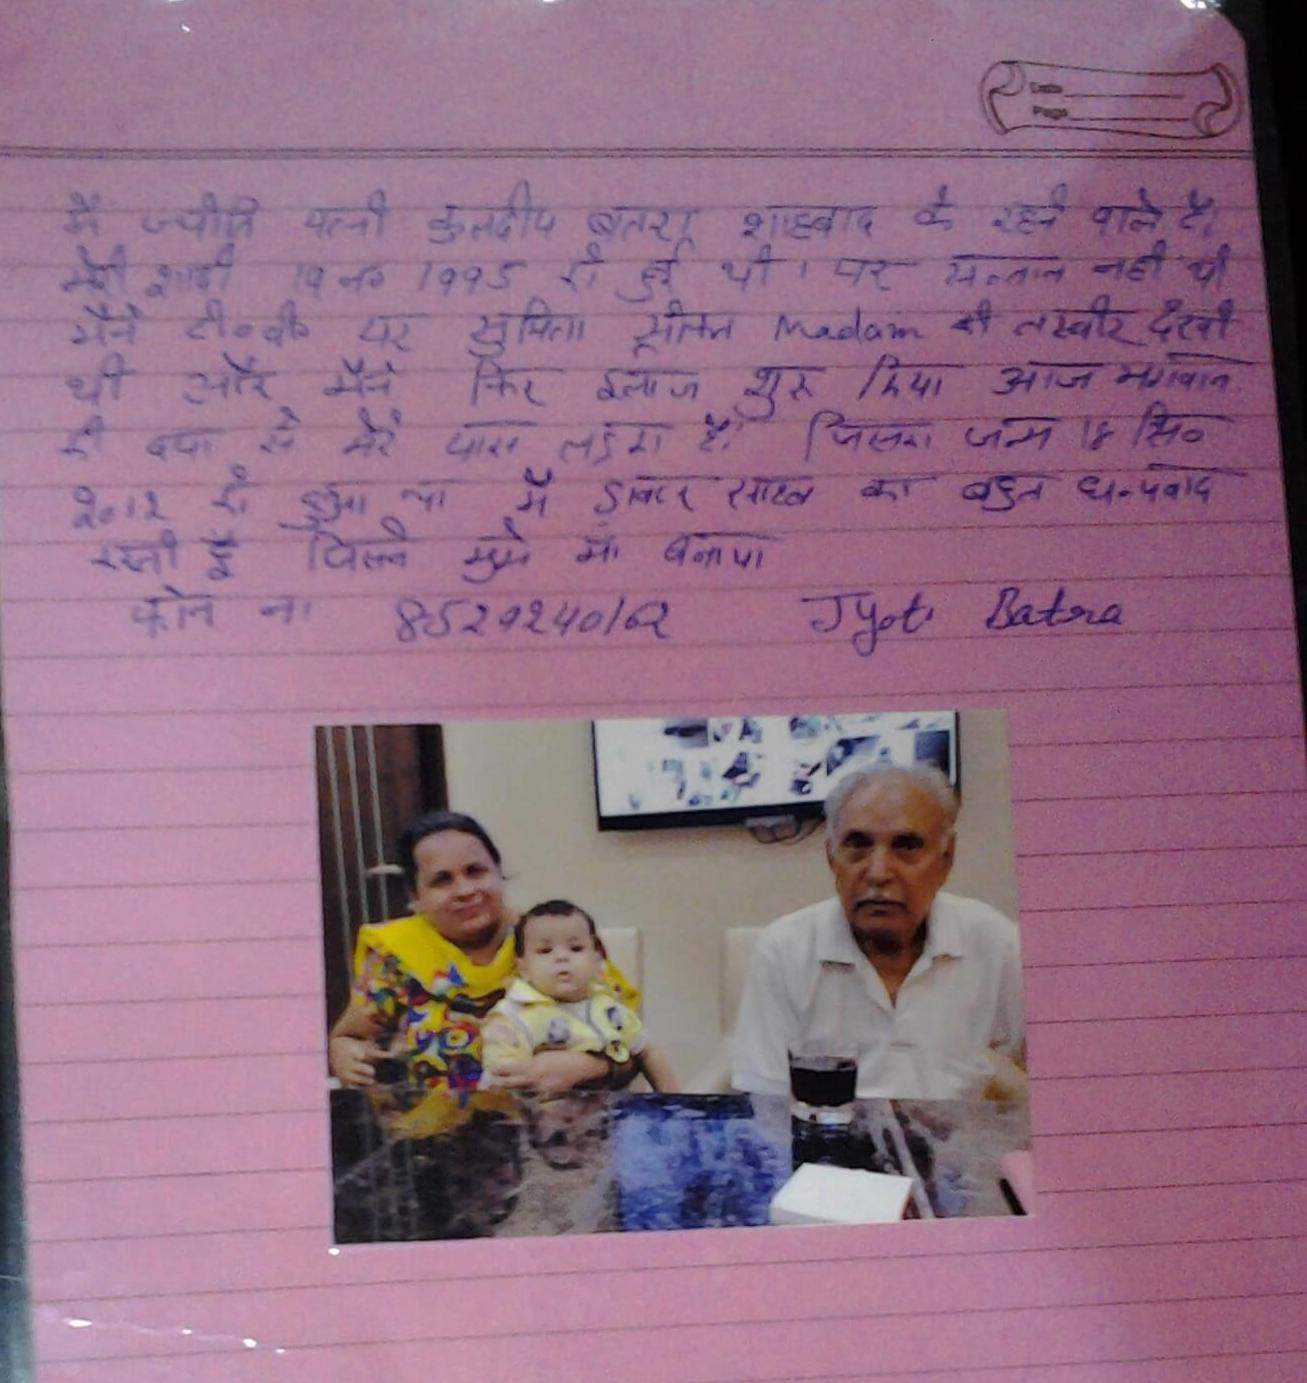 Kuldeep Batra & Jyoti Batra Smiles After 17 Years